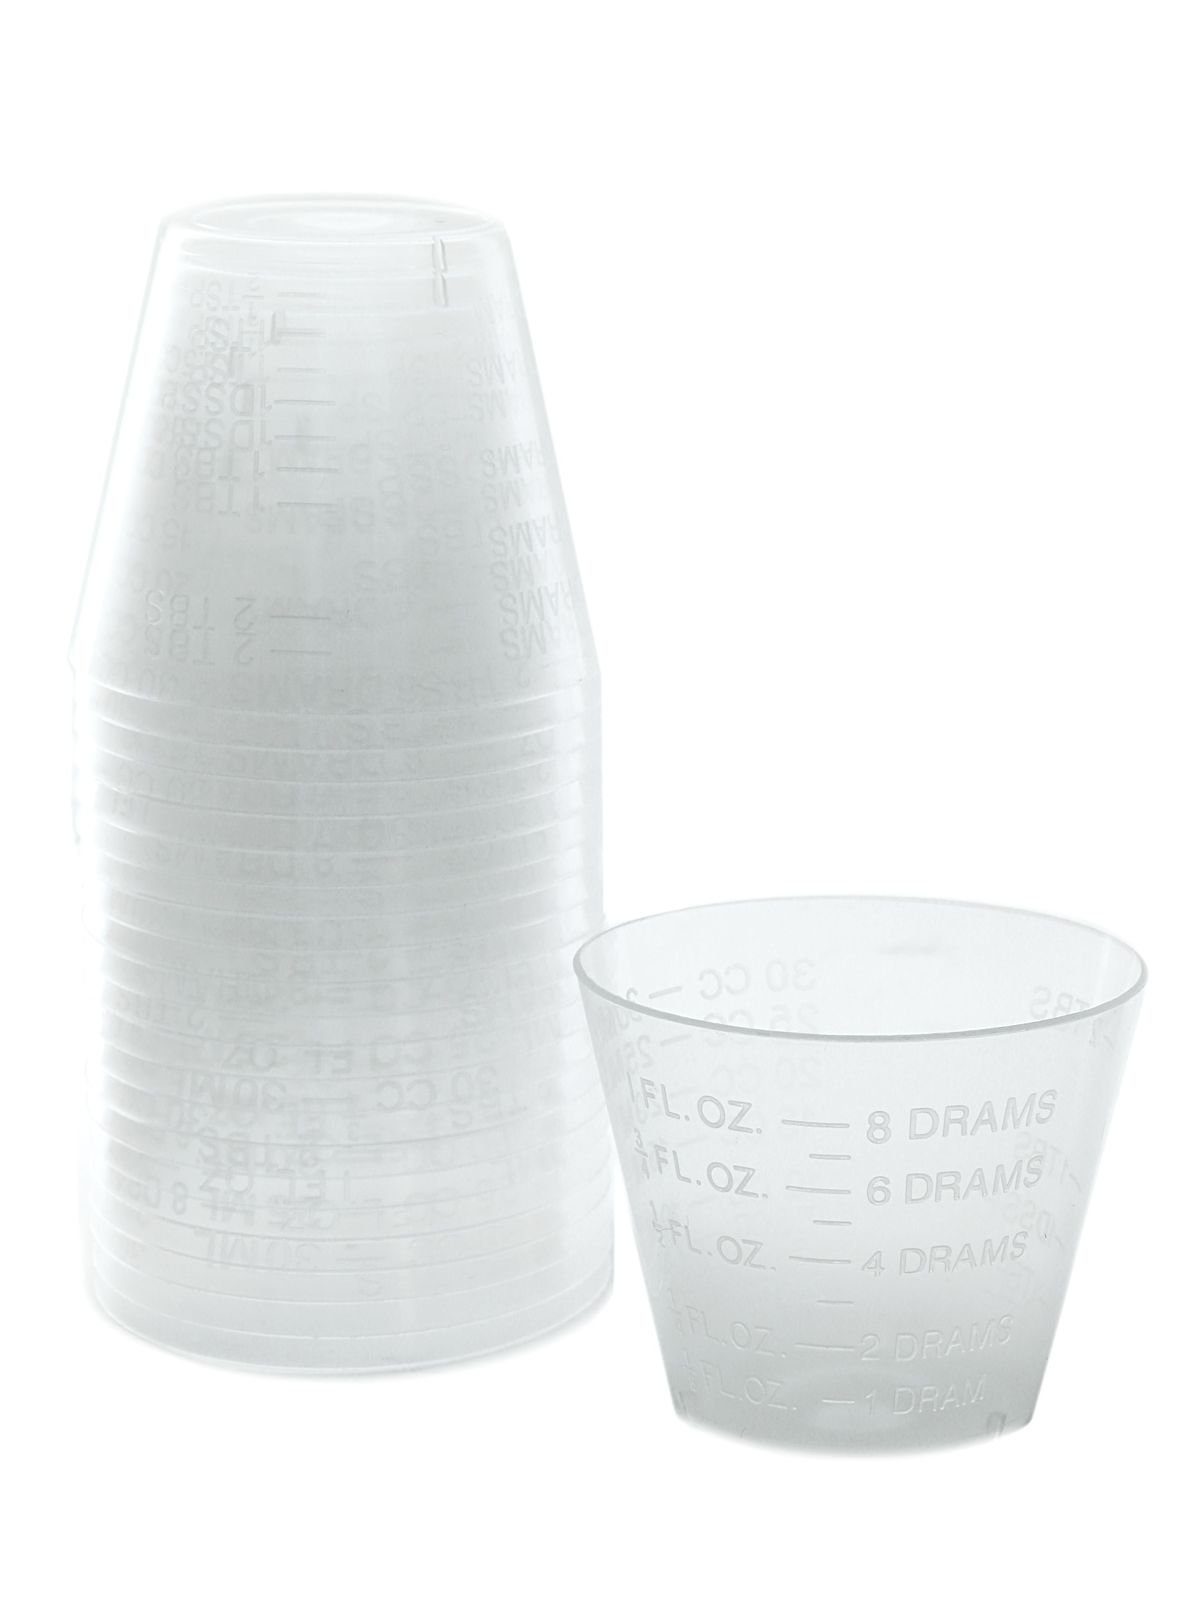 Measuring Cup (6 ounce) - Alumilite